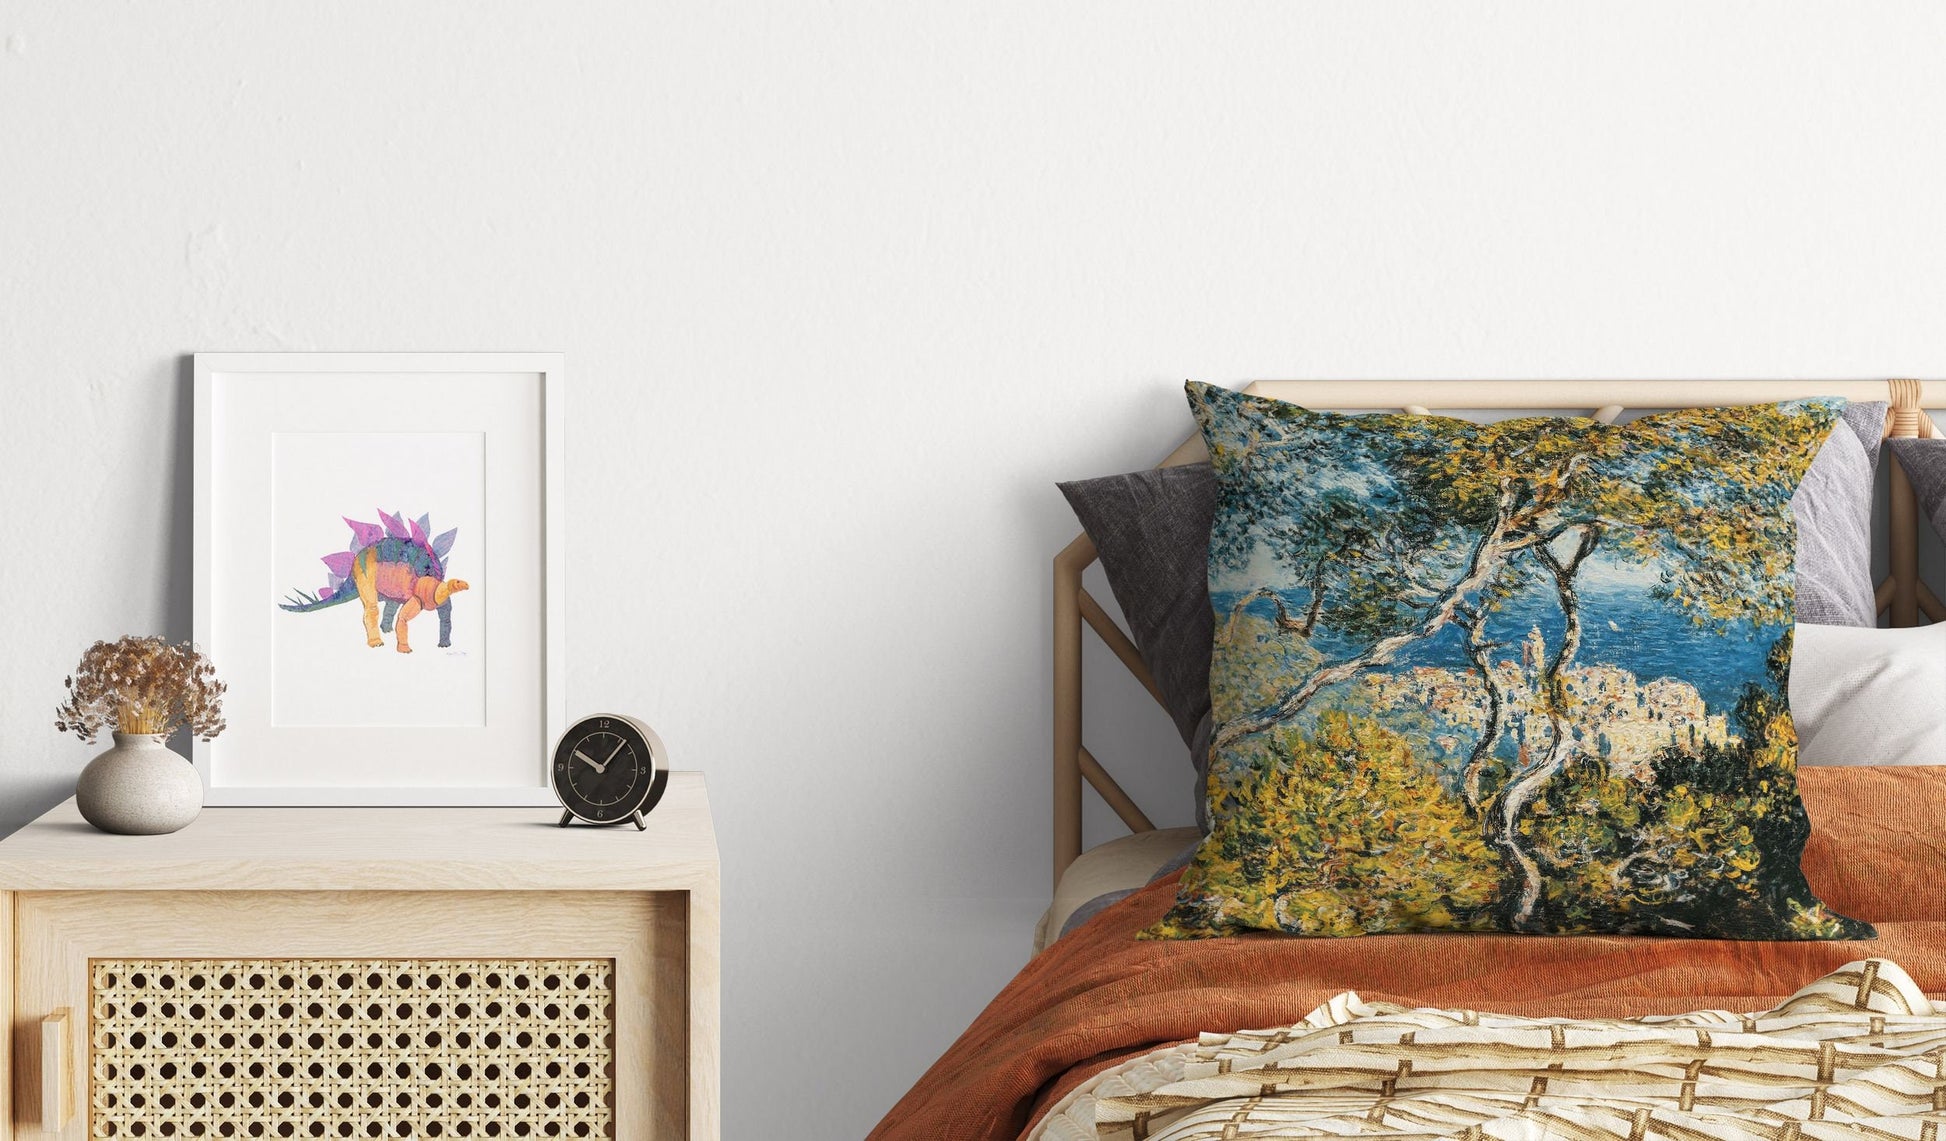 Claude Monet Famous Painting Bordighera, Decorative Pillow, Abstract Throw Pillow, Art Pillow, Bright Yellow Pillow, Modern Pillow